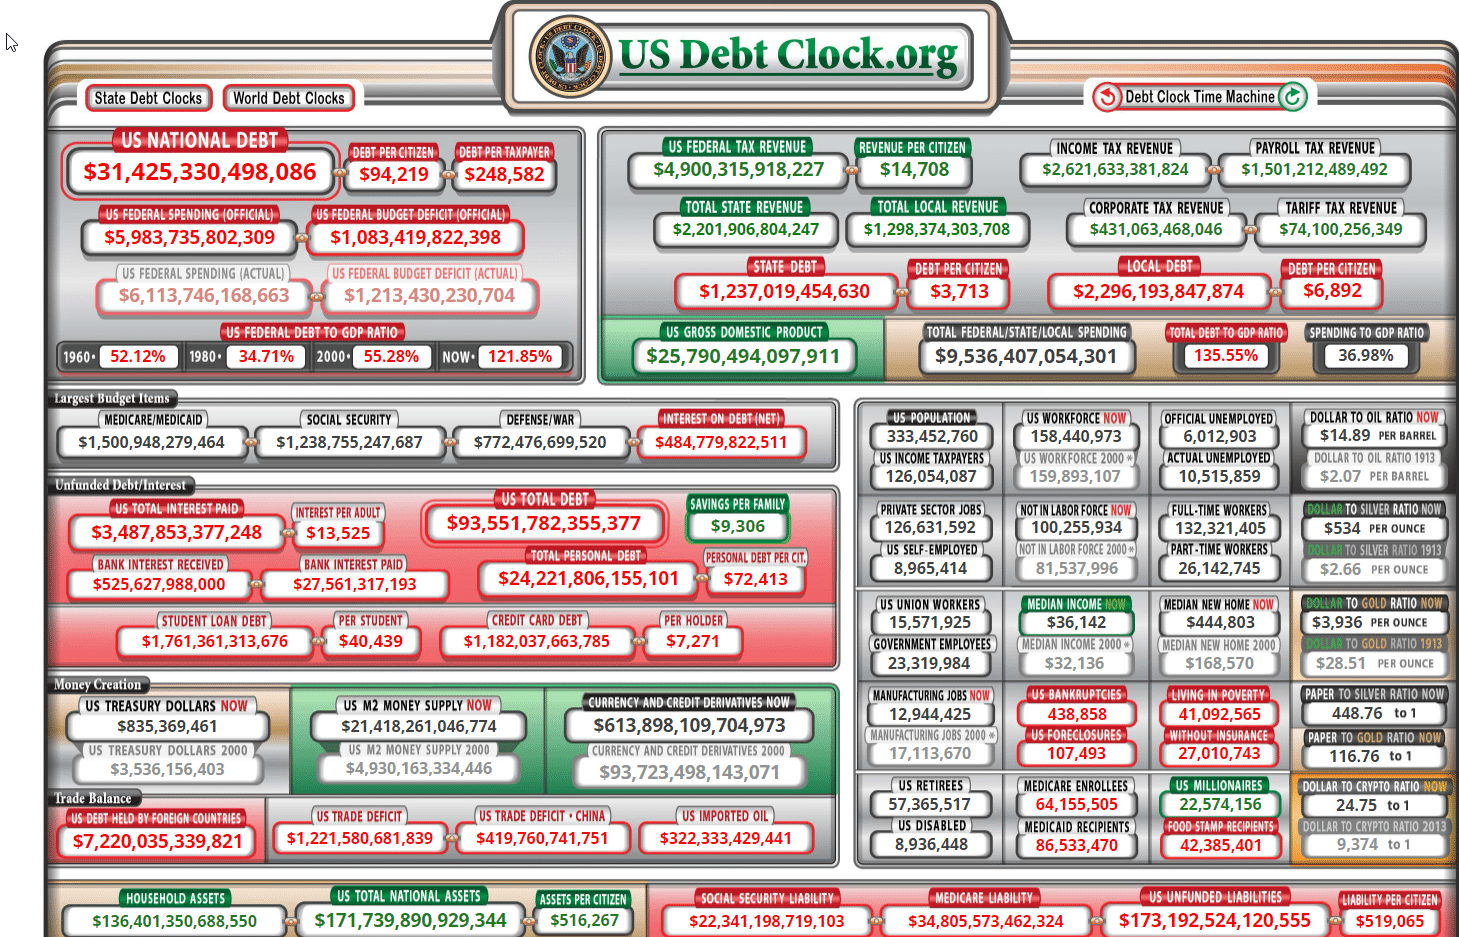 US Debt clock